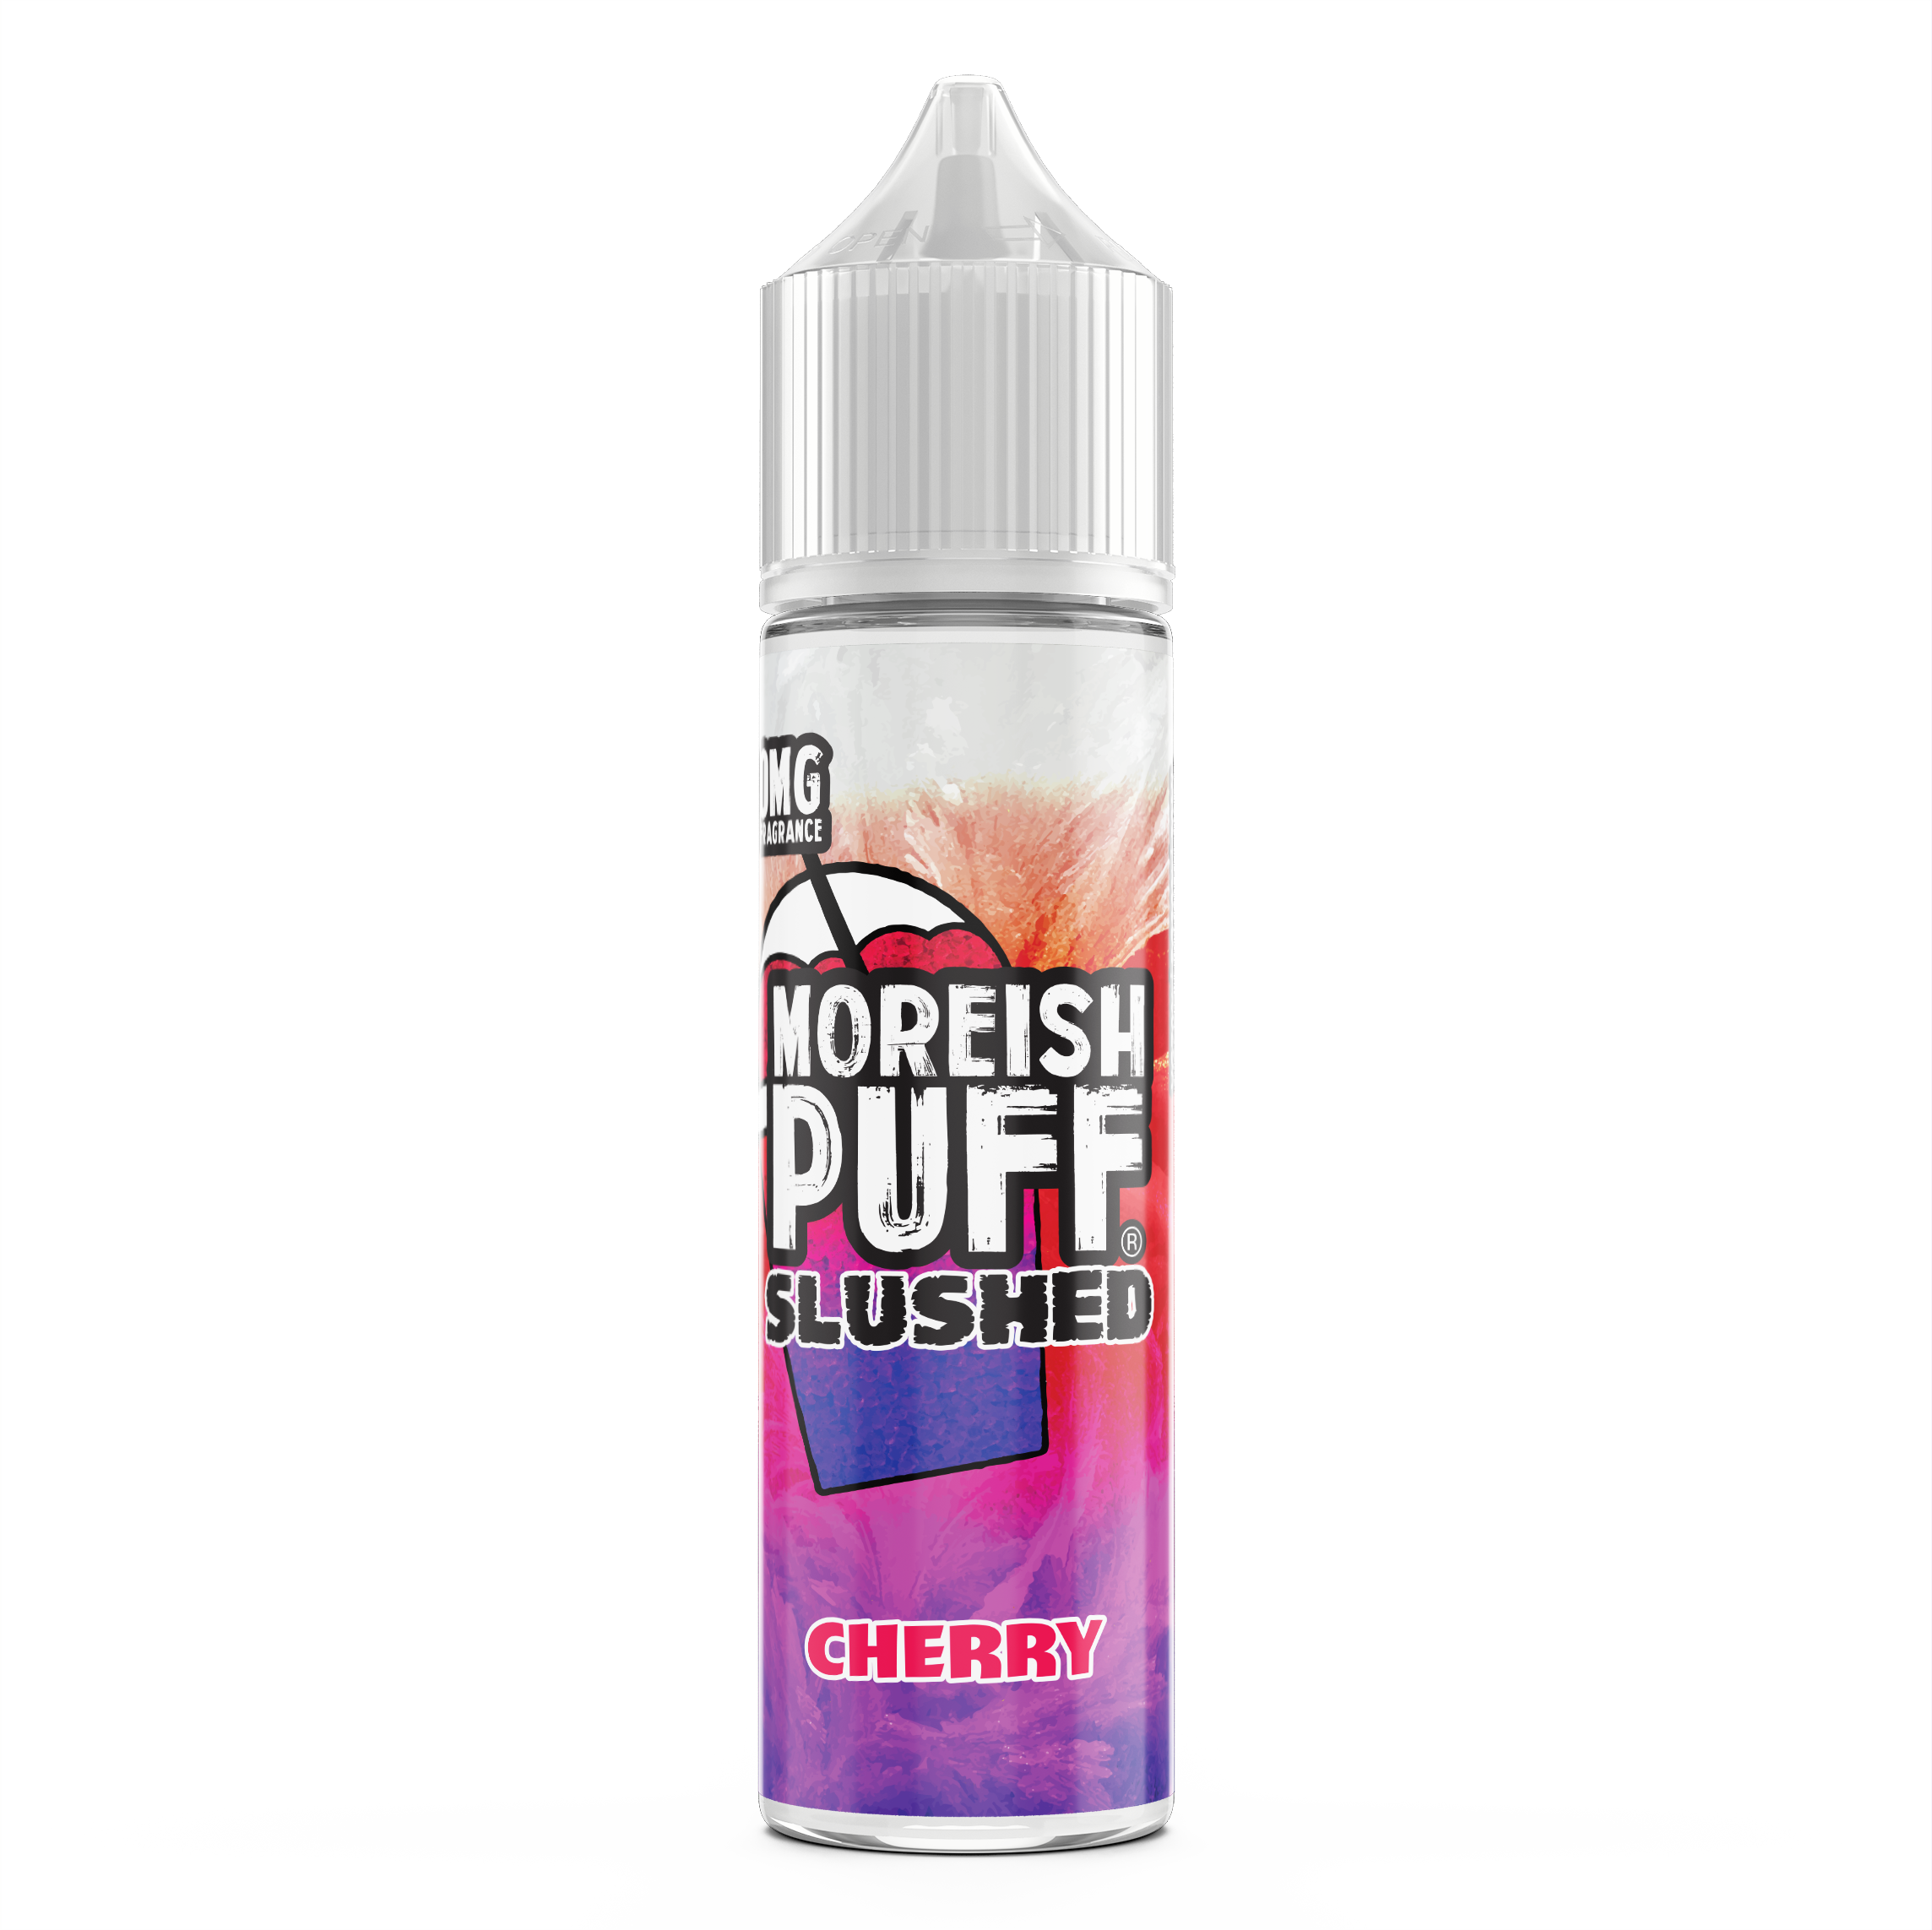 Moreish Puff Slushed Cherry 0mg 50ml Shortfill E-Liquid